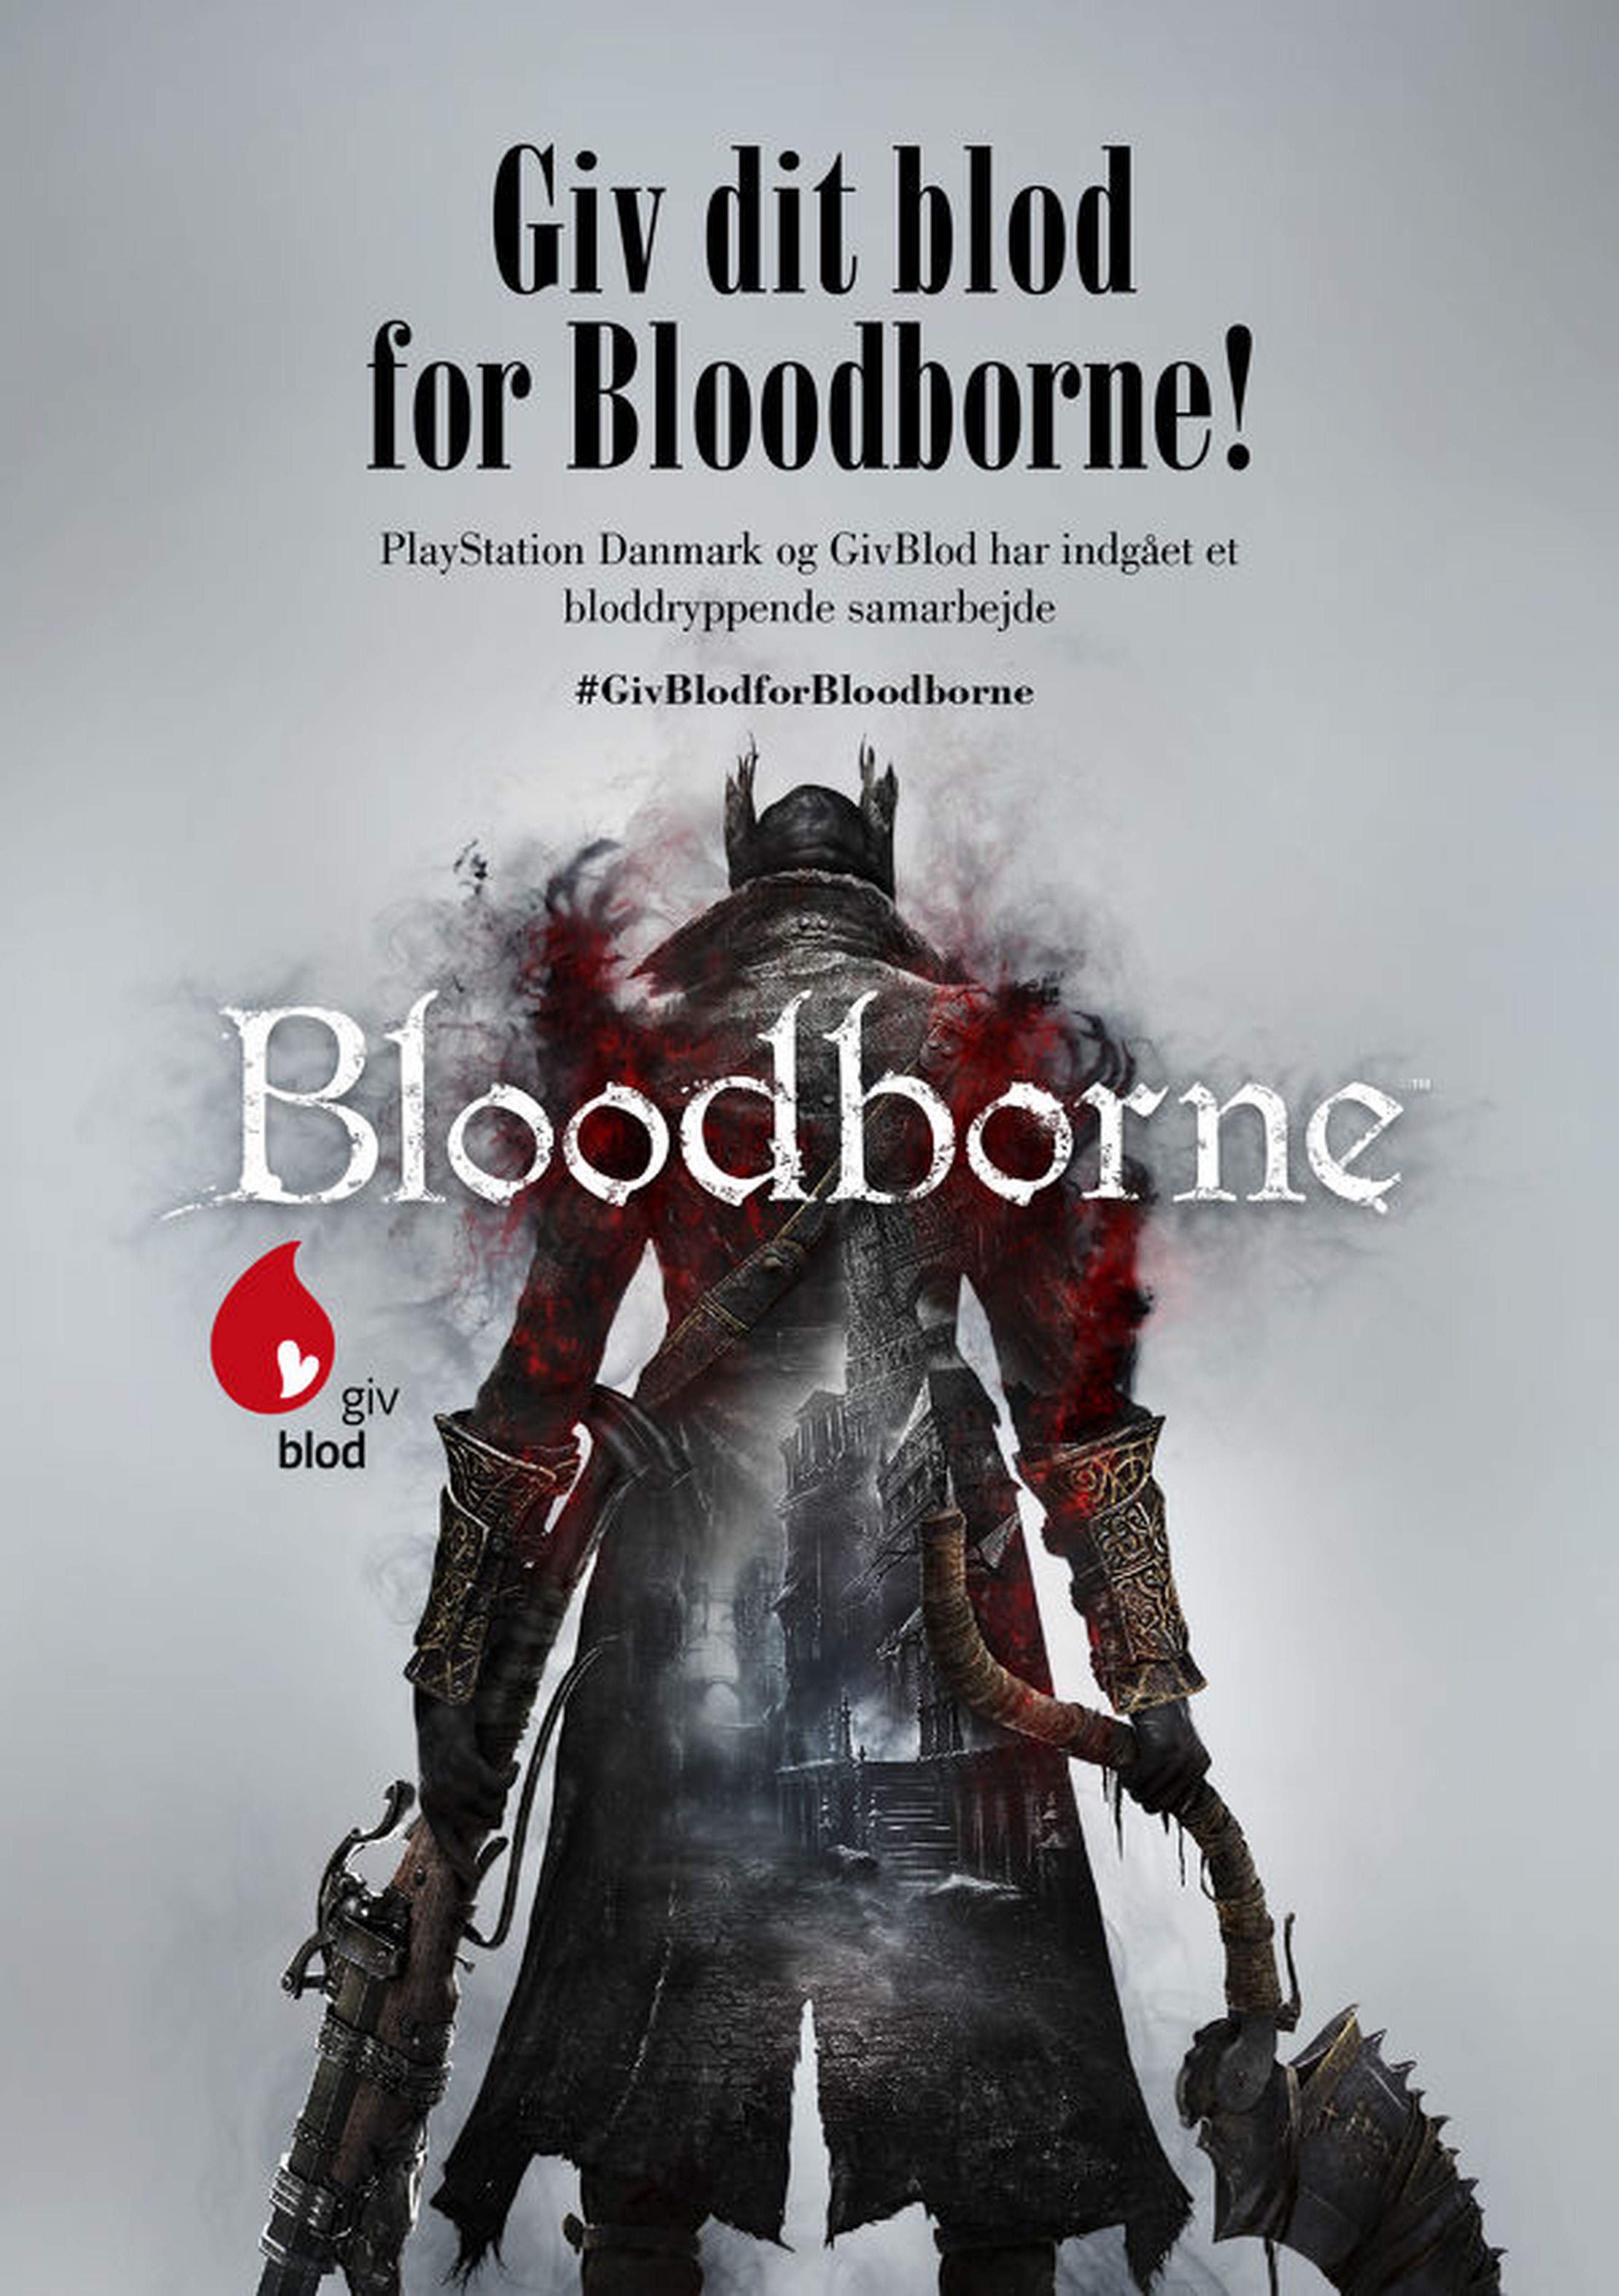 Bloodborne gratis en Dinamarca por donar sangre